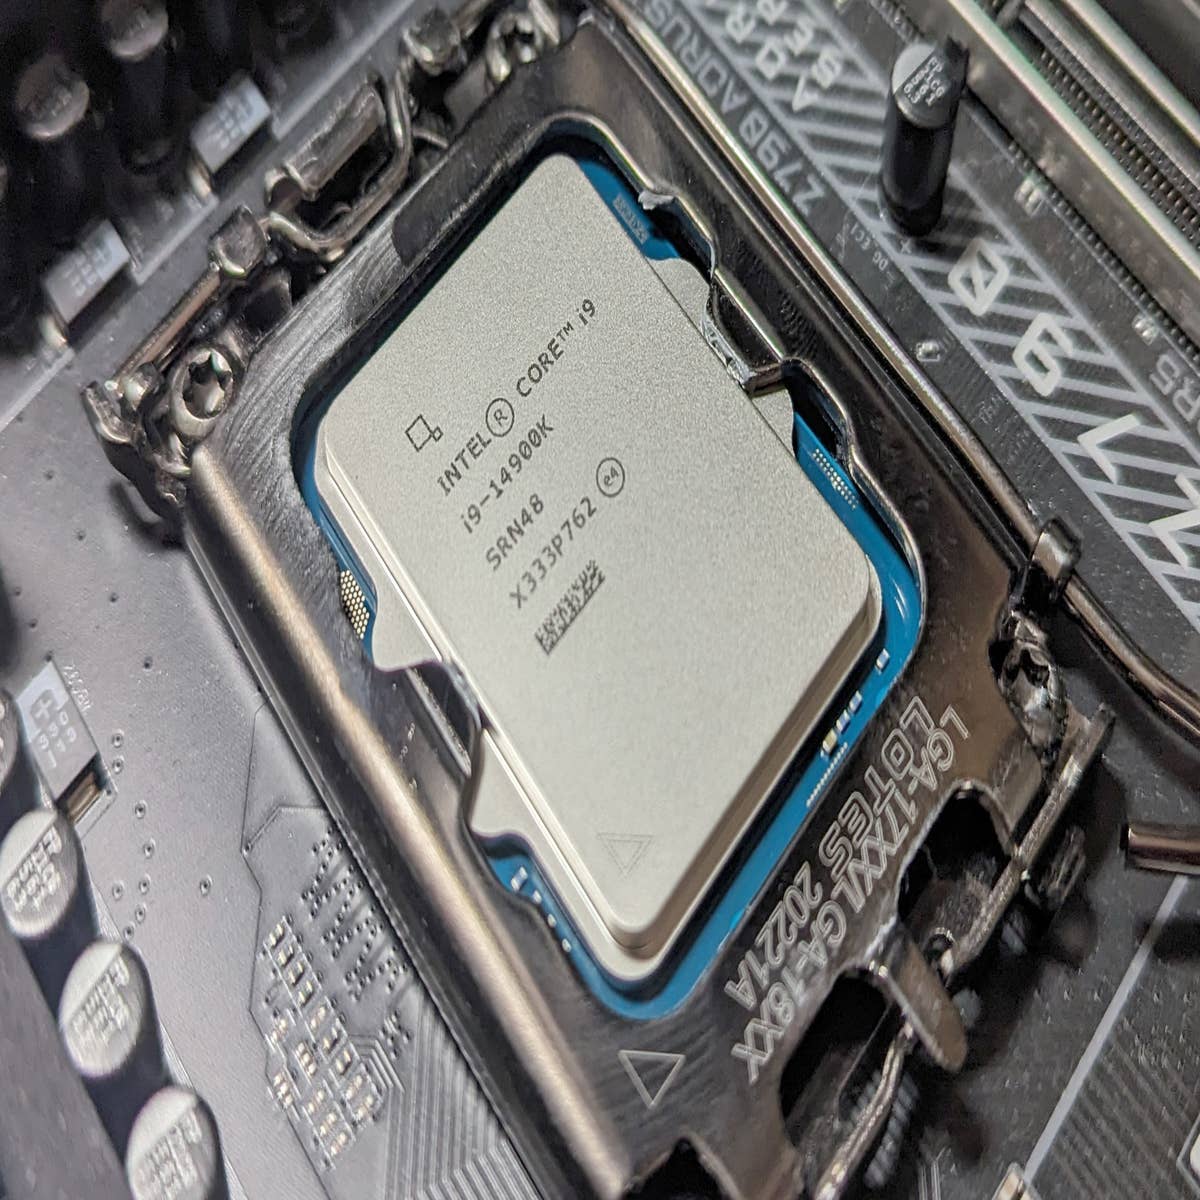 Intel Core i9-14900K & Core i5-14600K Review - IGN